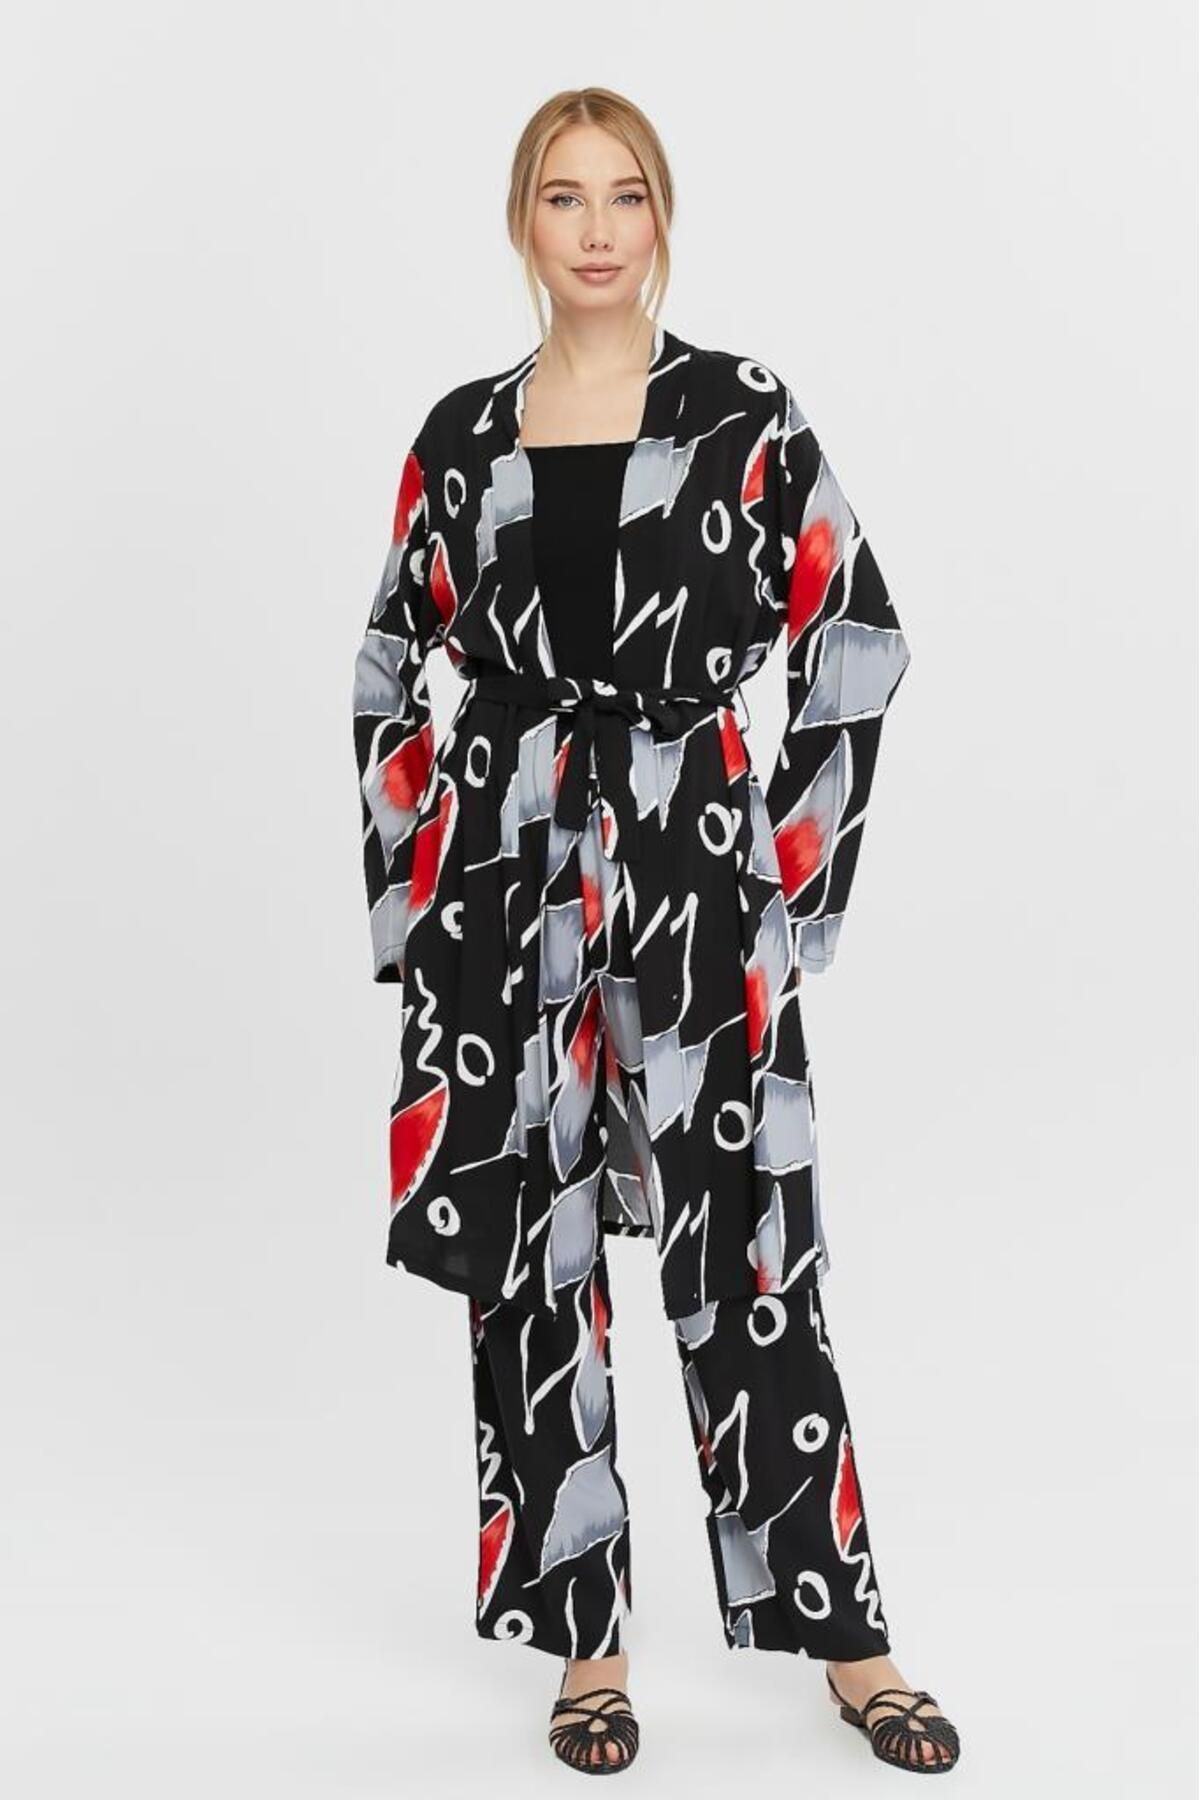 Jamila Renkli Ikili Takım Kadın Kimono